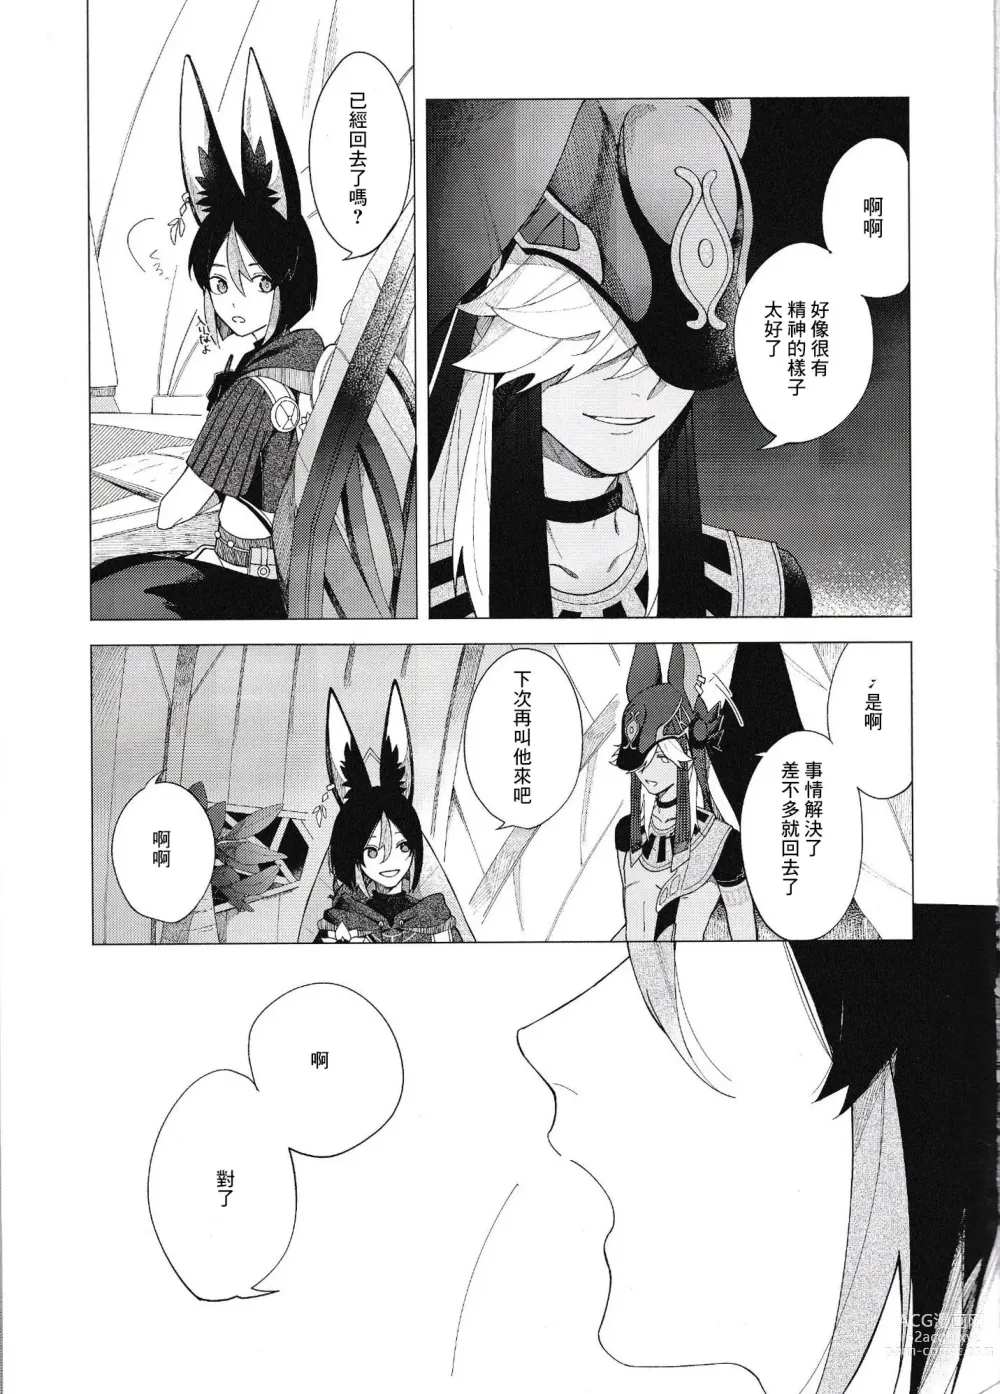 Page 4 of doujinshi 這種咬法沒聽說過啊!